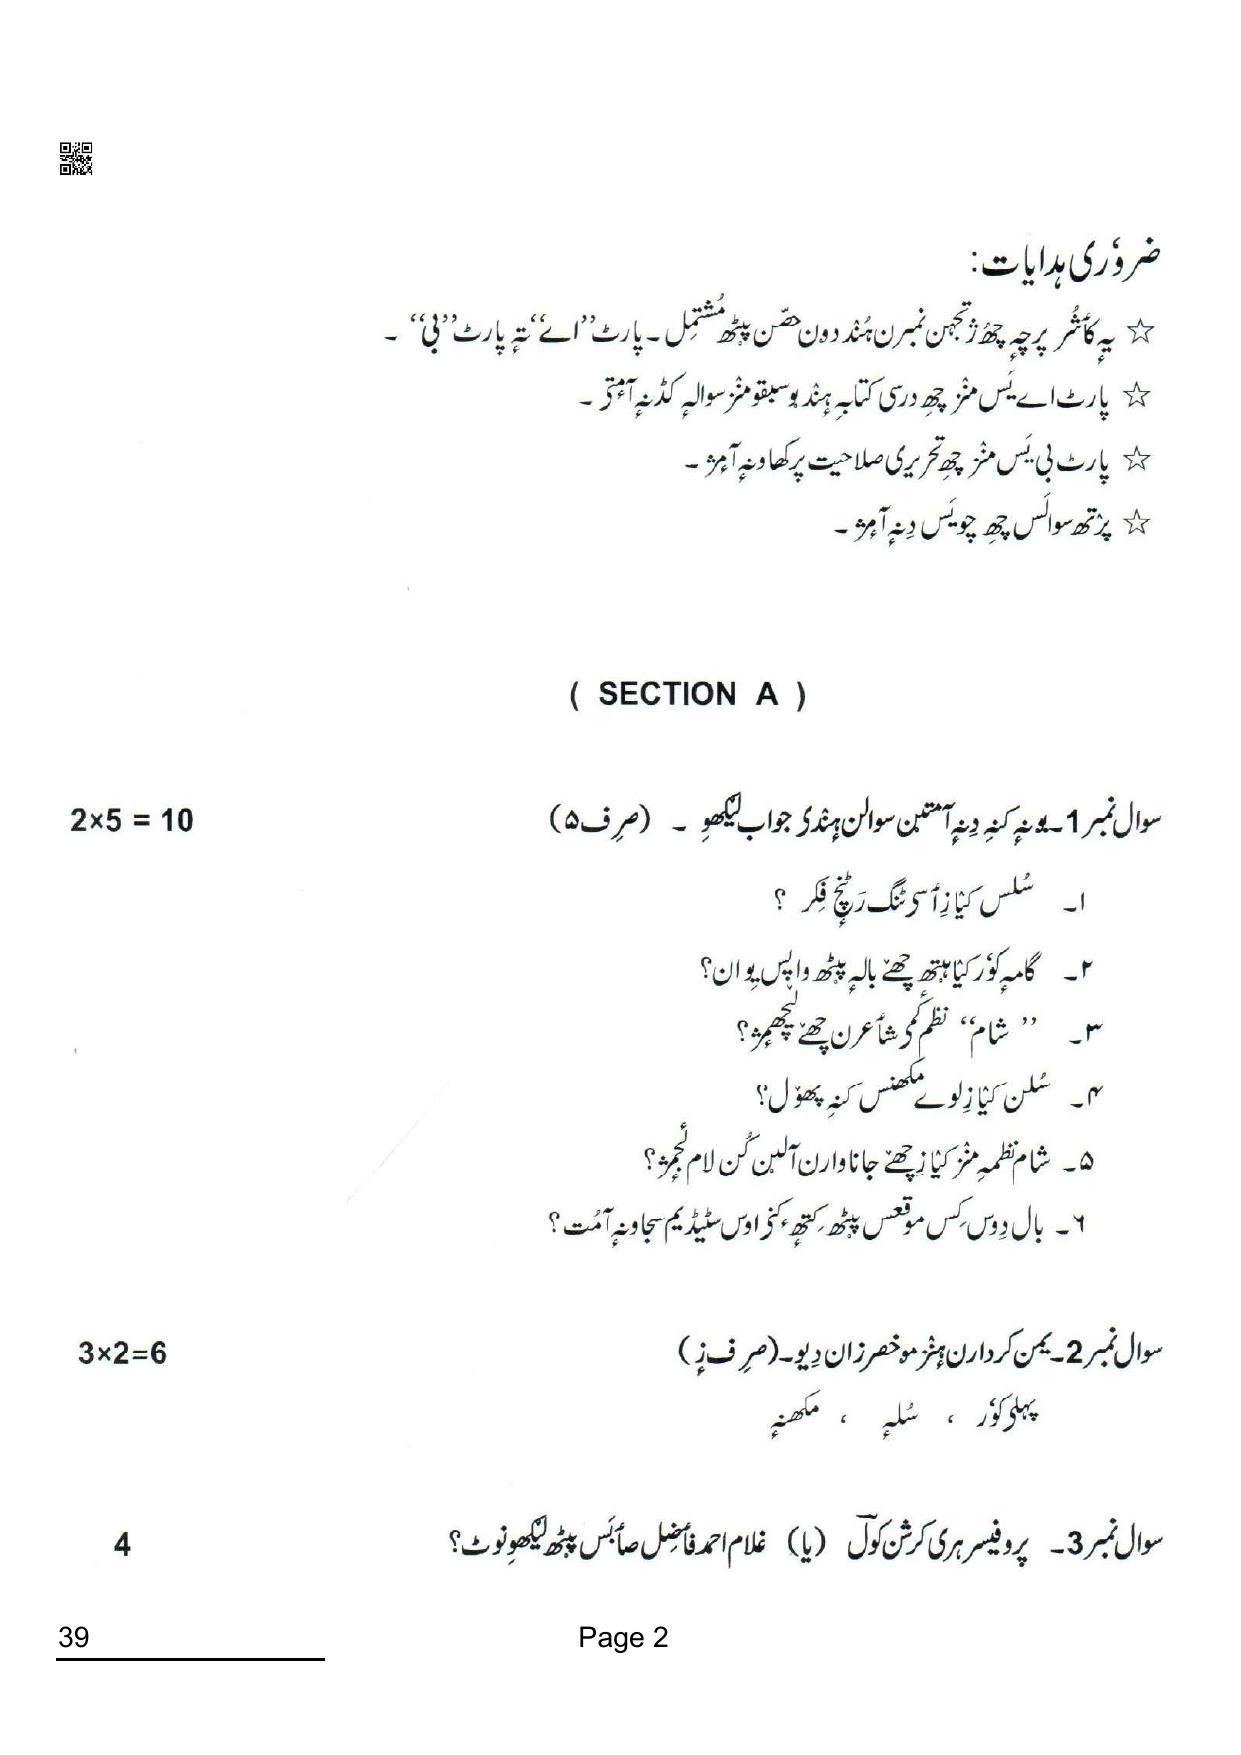 CBSE Class 10 39_Kashmiri 2022 Question Paper - Page 2